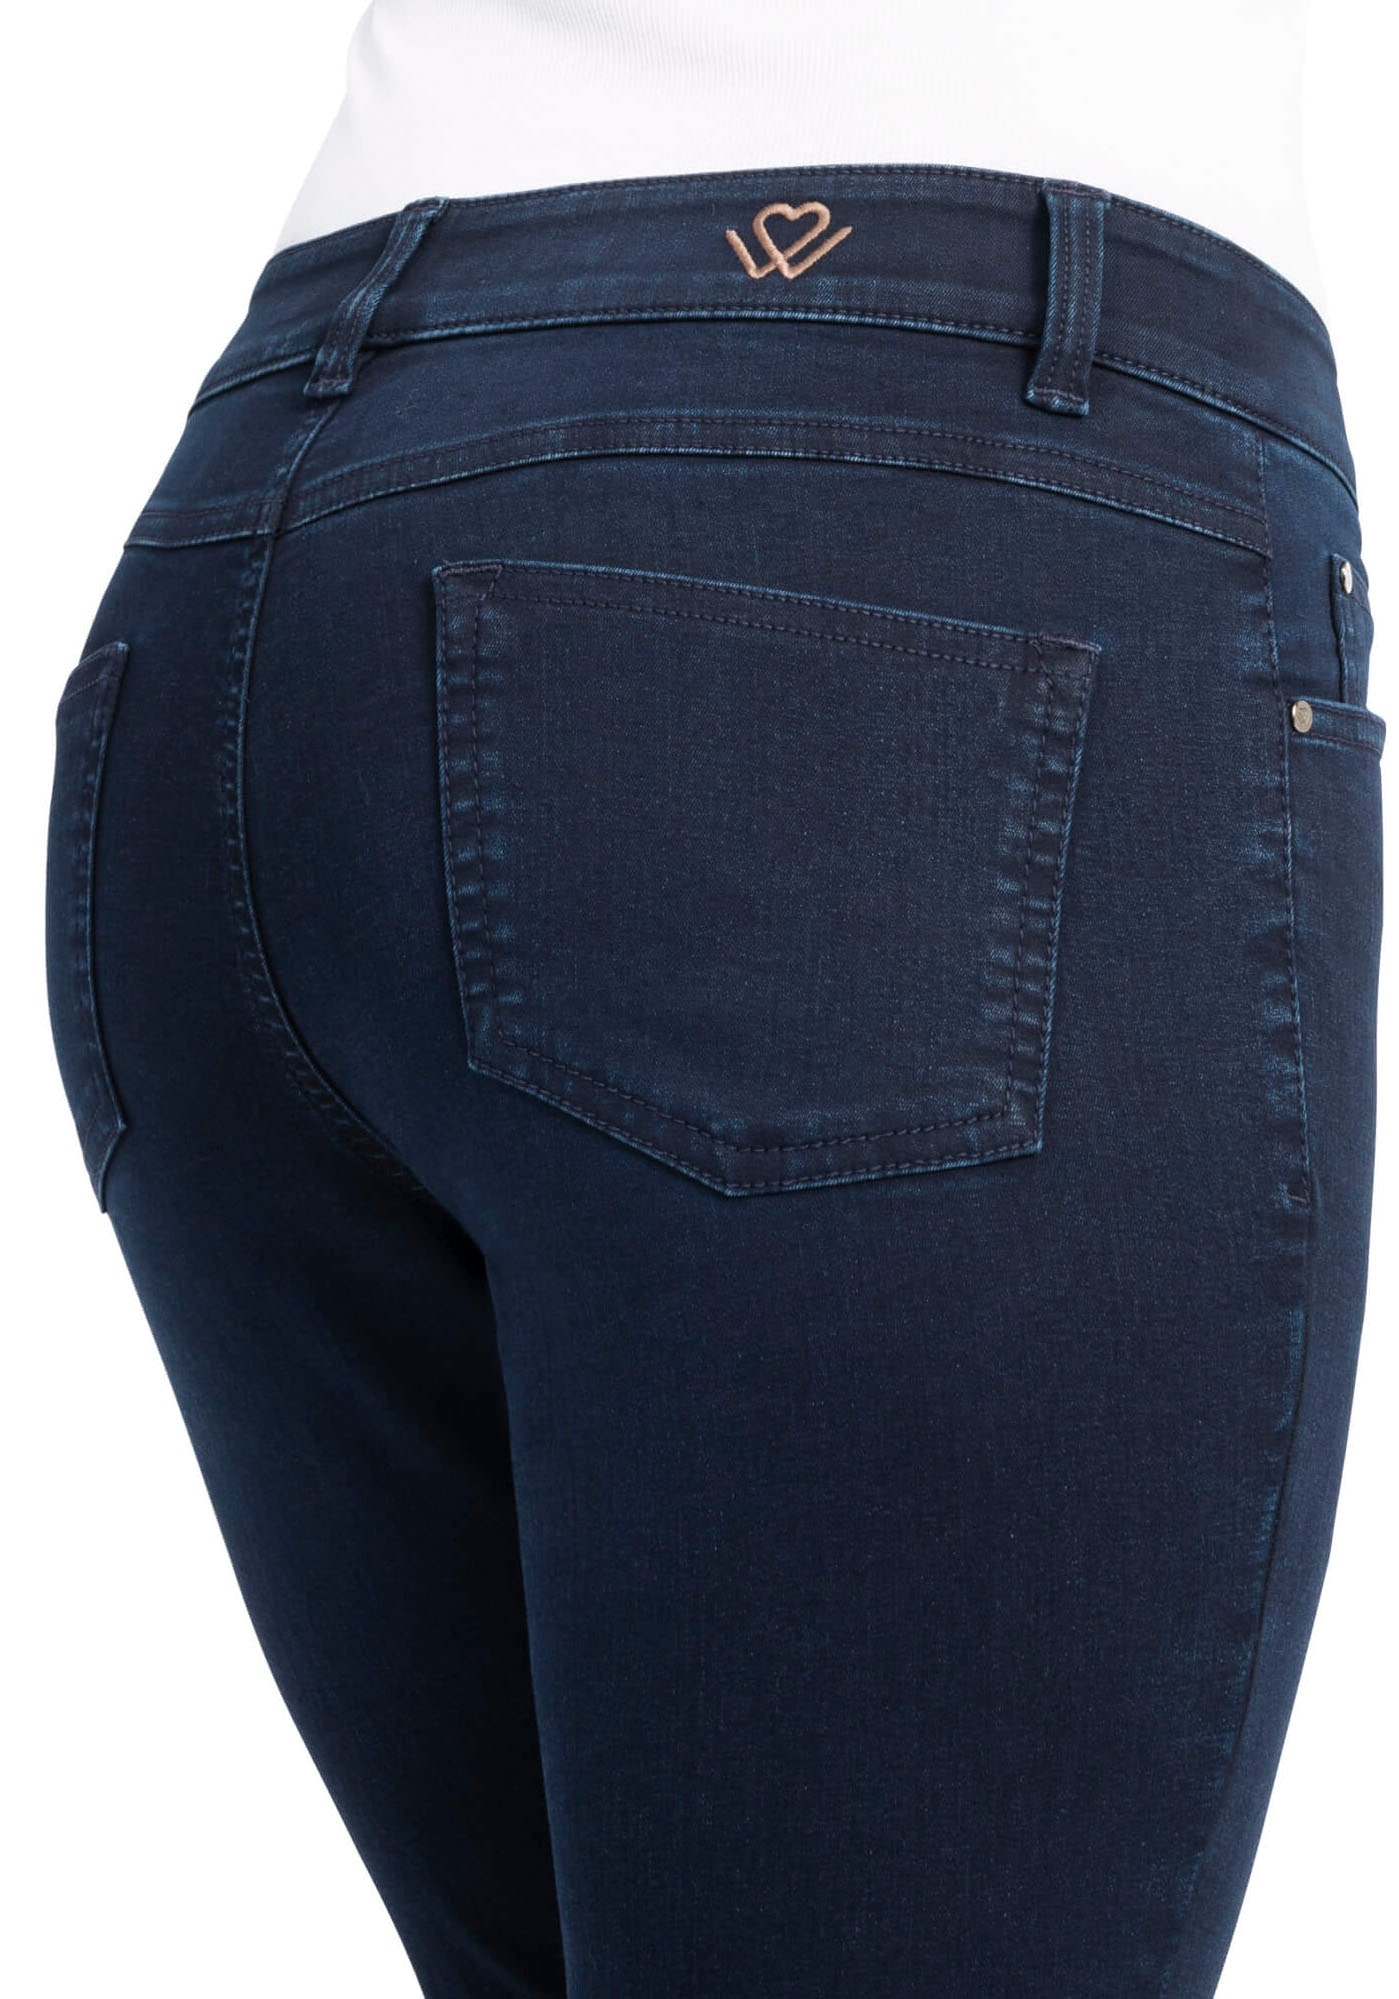 wonderjeans Skinny-fit-Jeans »Skinny-WS76-80«, Schmaler Skinny-Fit in hochelastischer Qualität